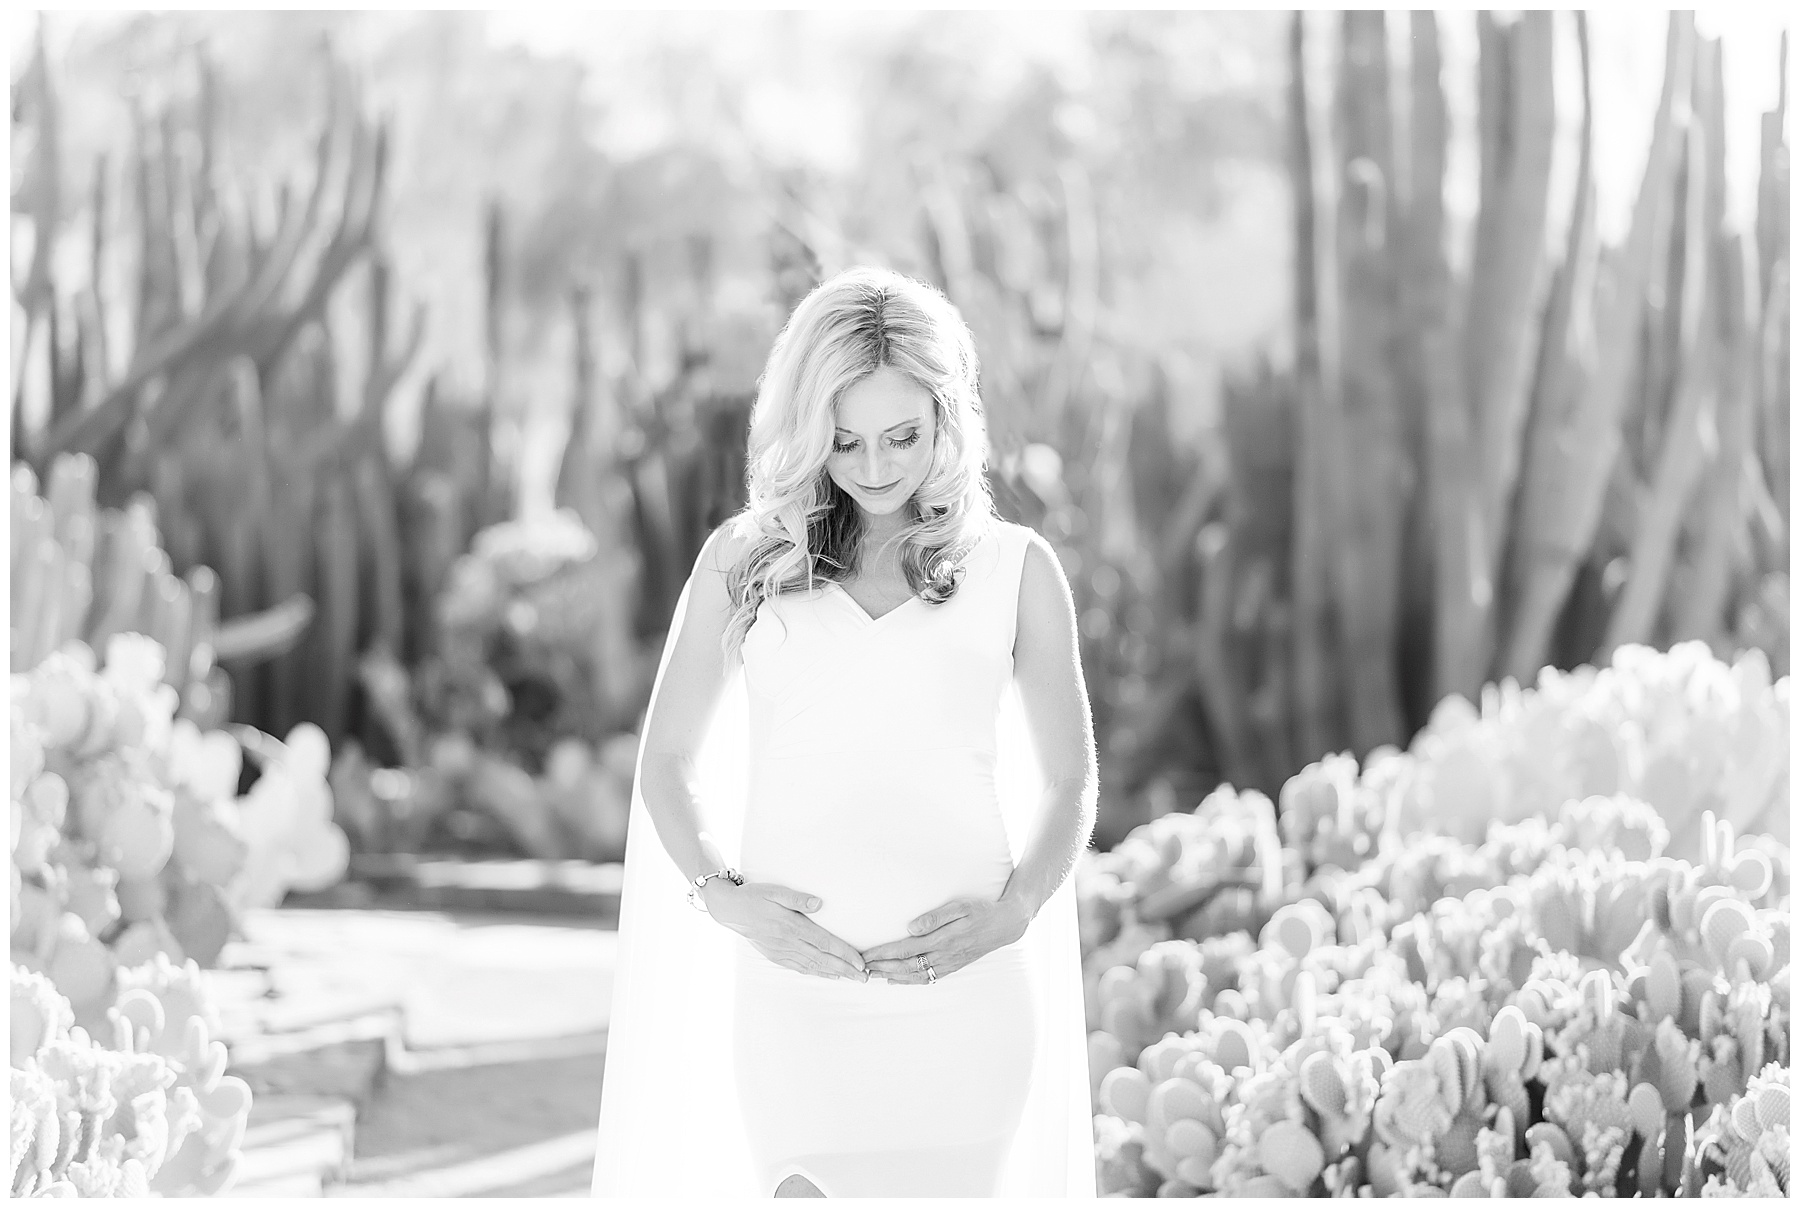 Dorota's-Maternity-Session-Phoenix-Arizona-Ashley-Flug-Photography17-B&W.jpg